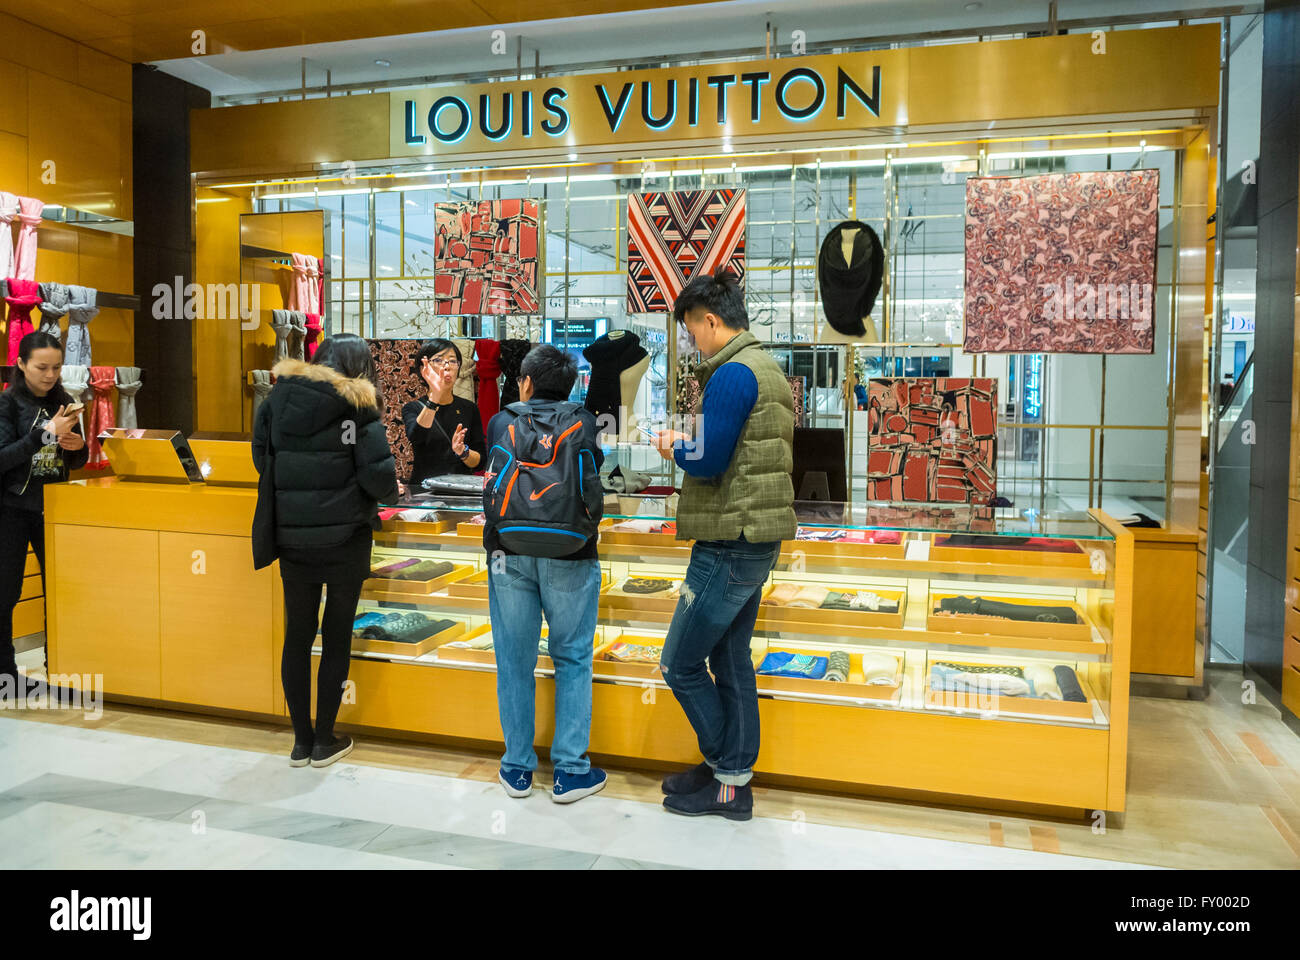 Louis Vuitton Factory In Paris France | Jaguar Clubs of North America